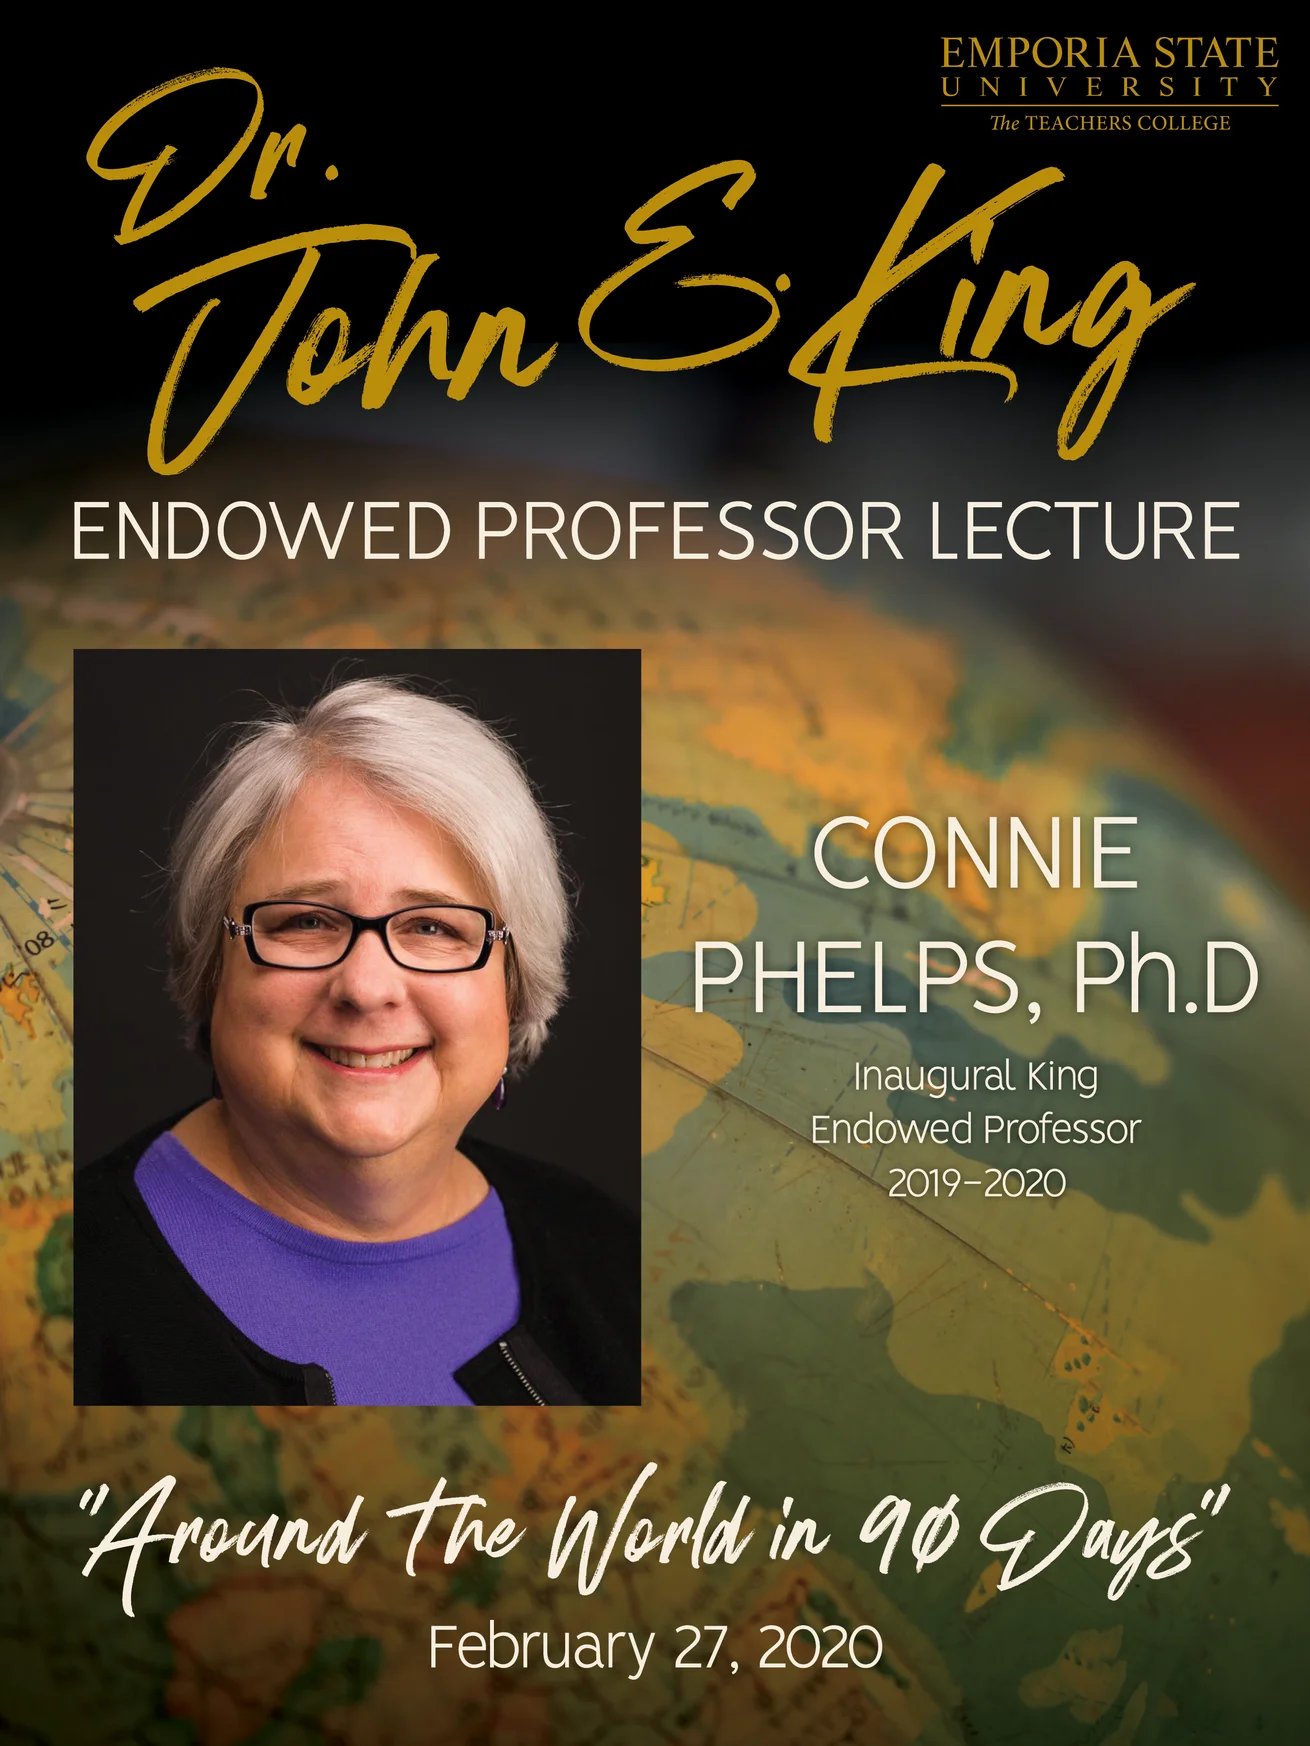 Dr. John E King Endowed Professor Lecture poster